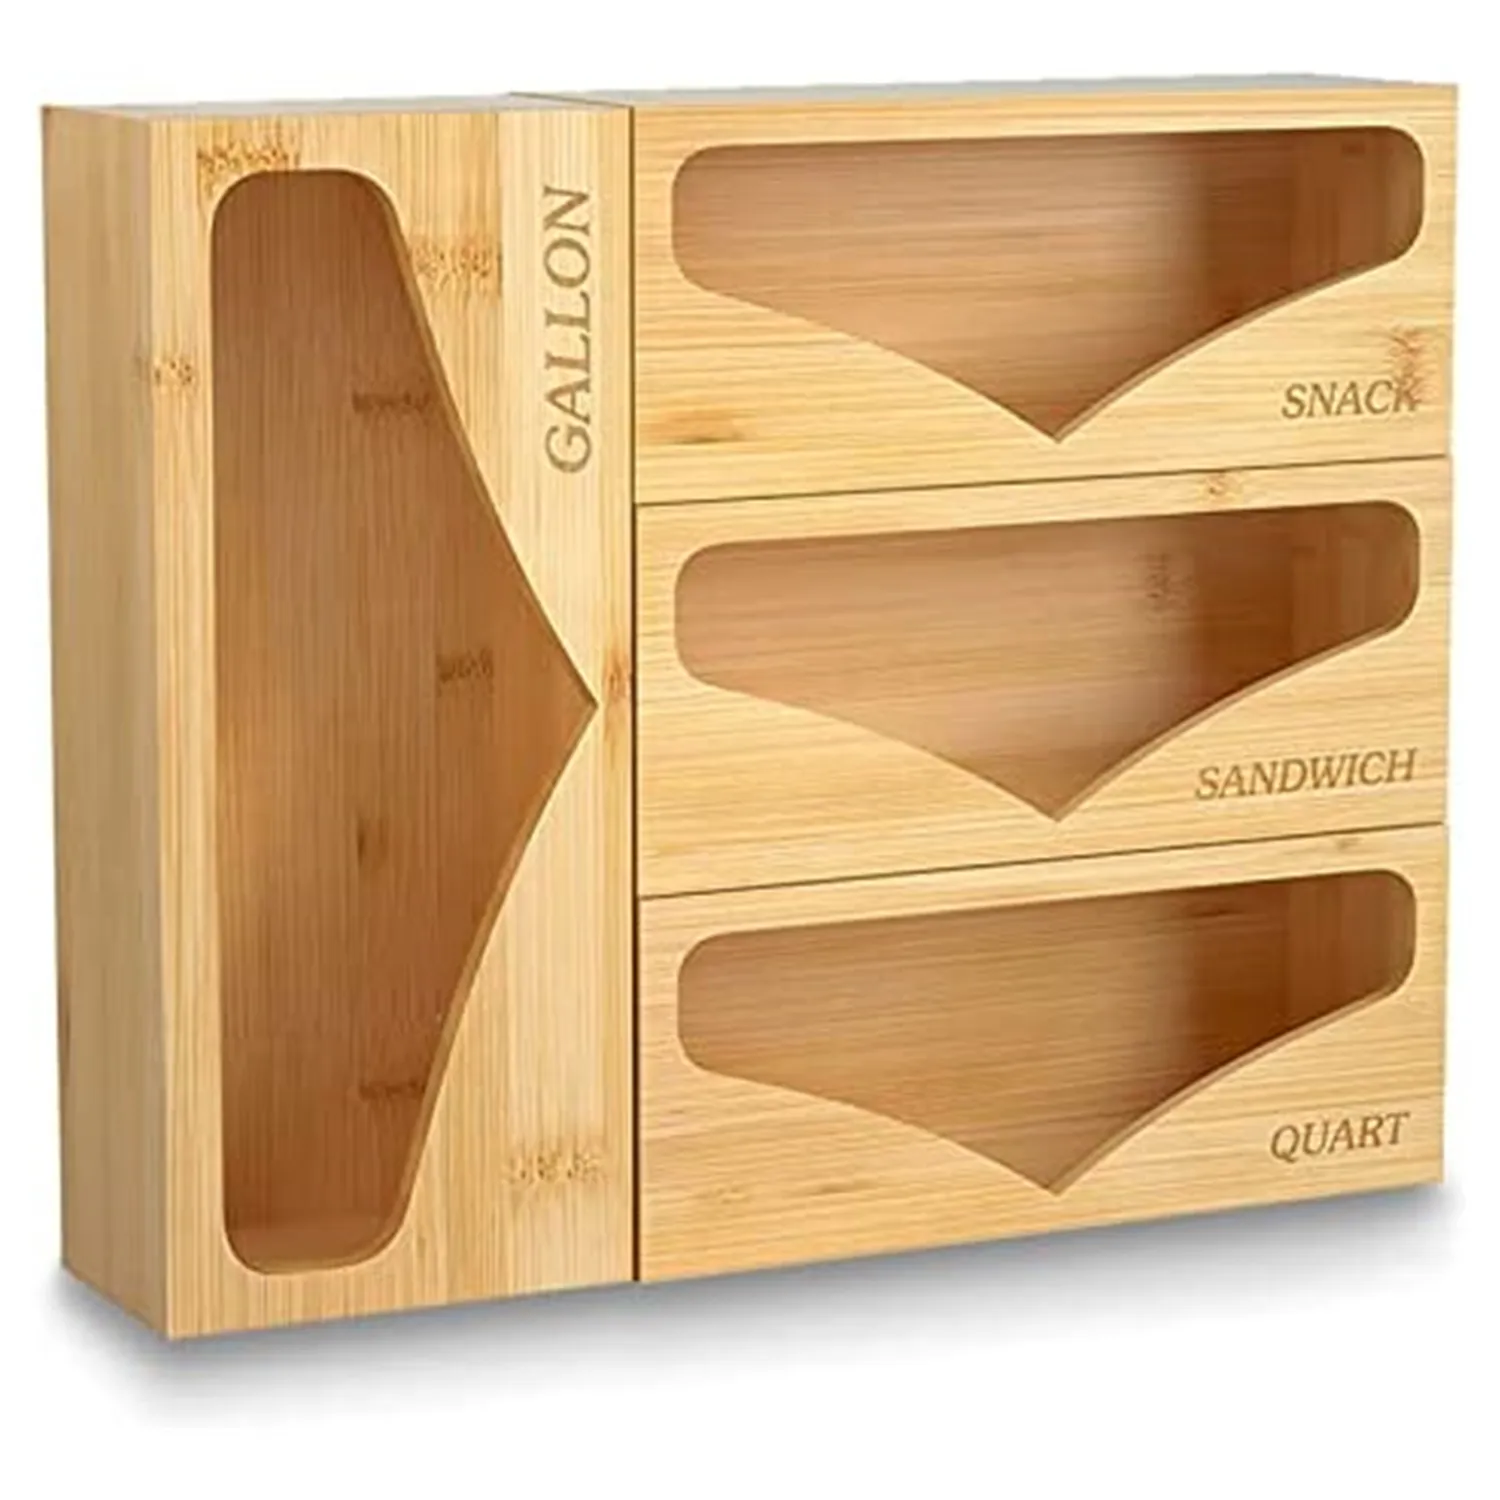 4 PCS Luxury Bamboo Wood Ziplock Bag Storage Box Sandwich Bag Organizer and Dispenser for Kitchen Drawer